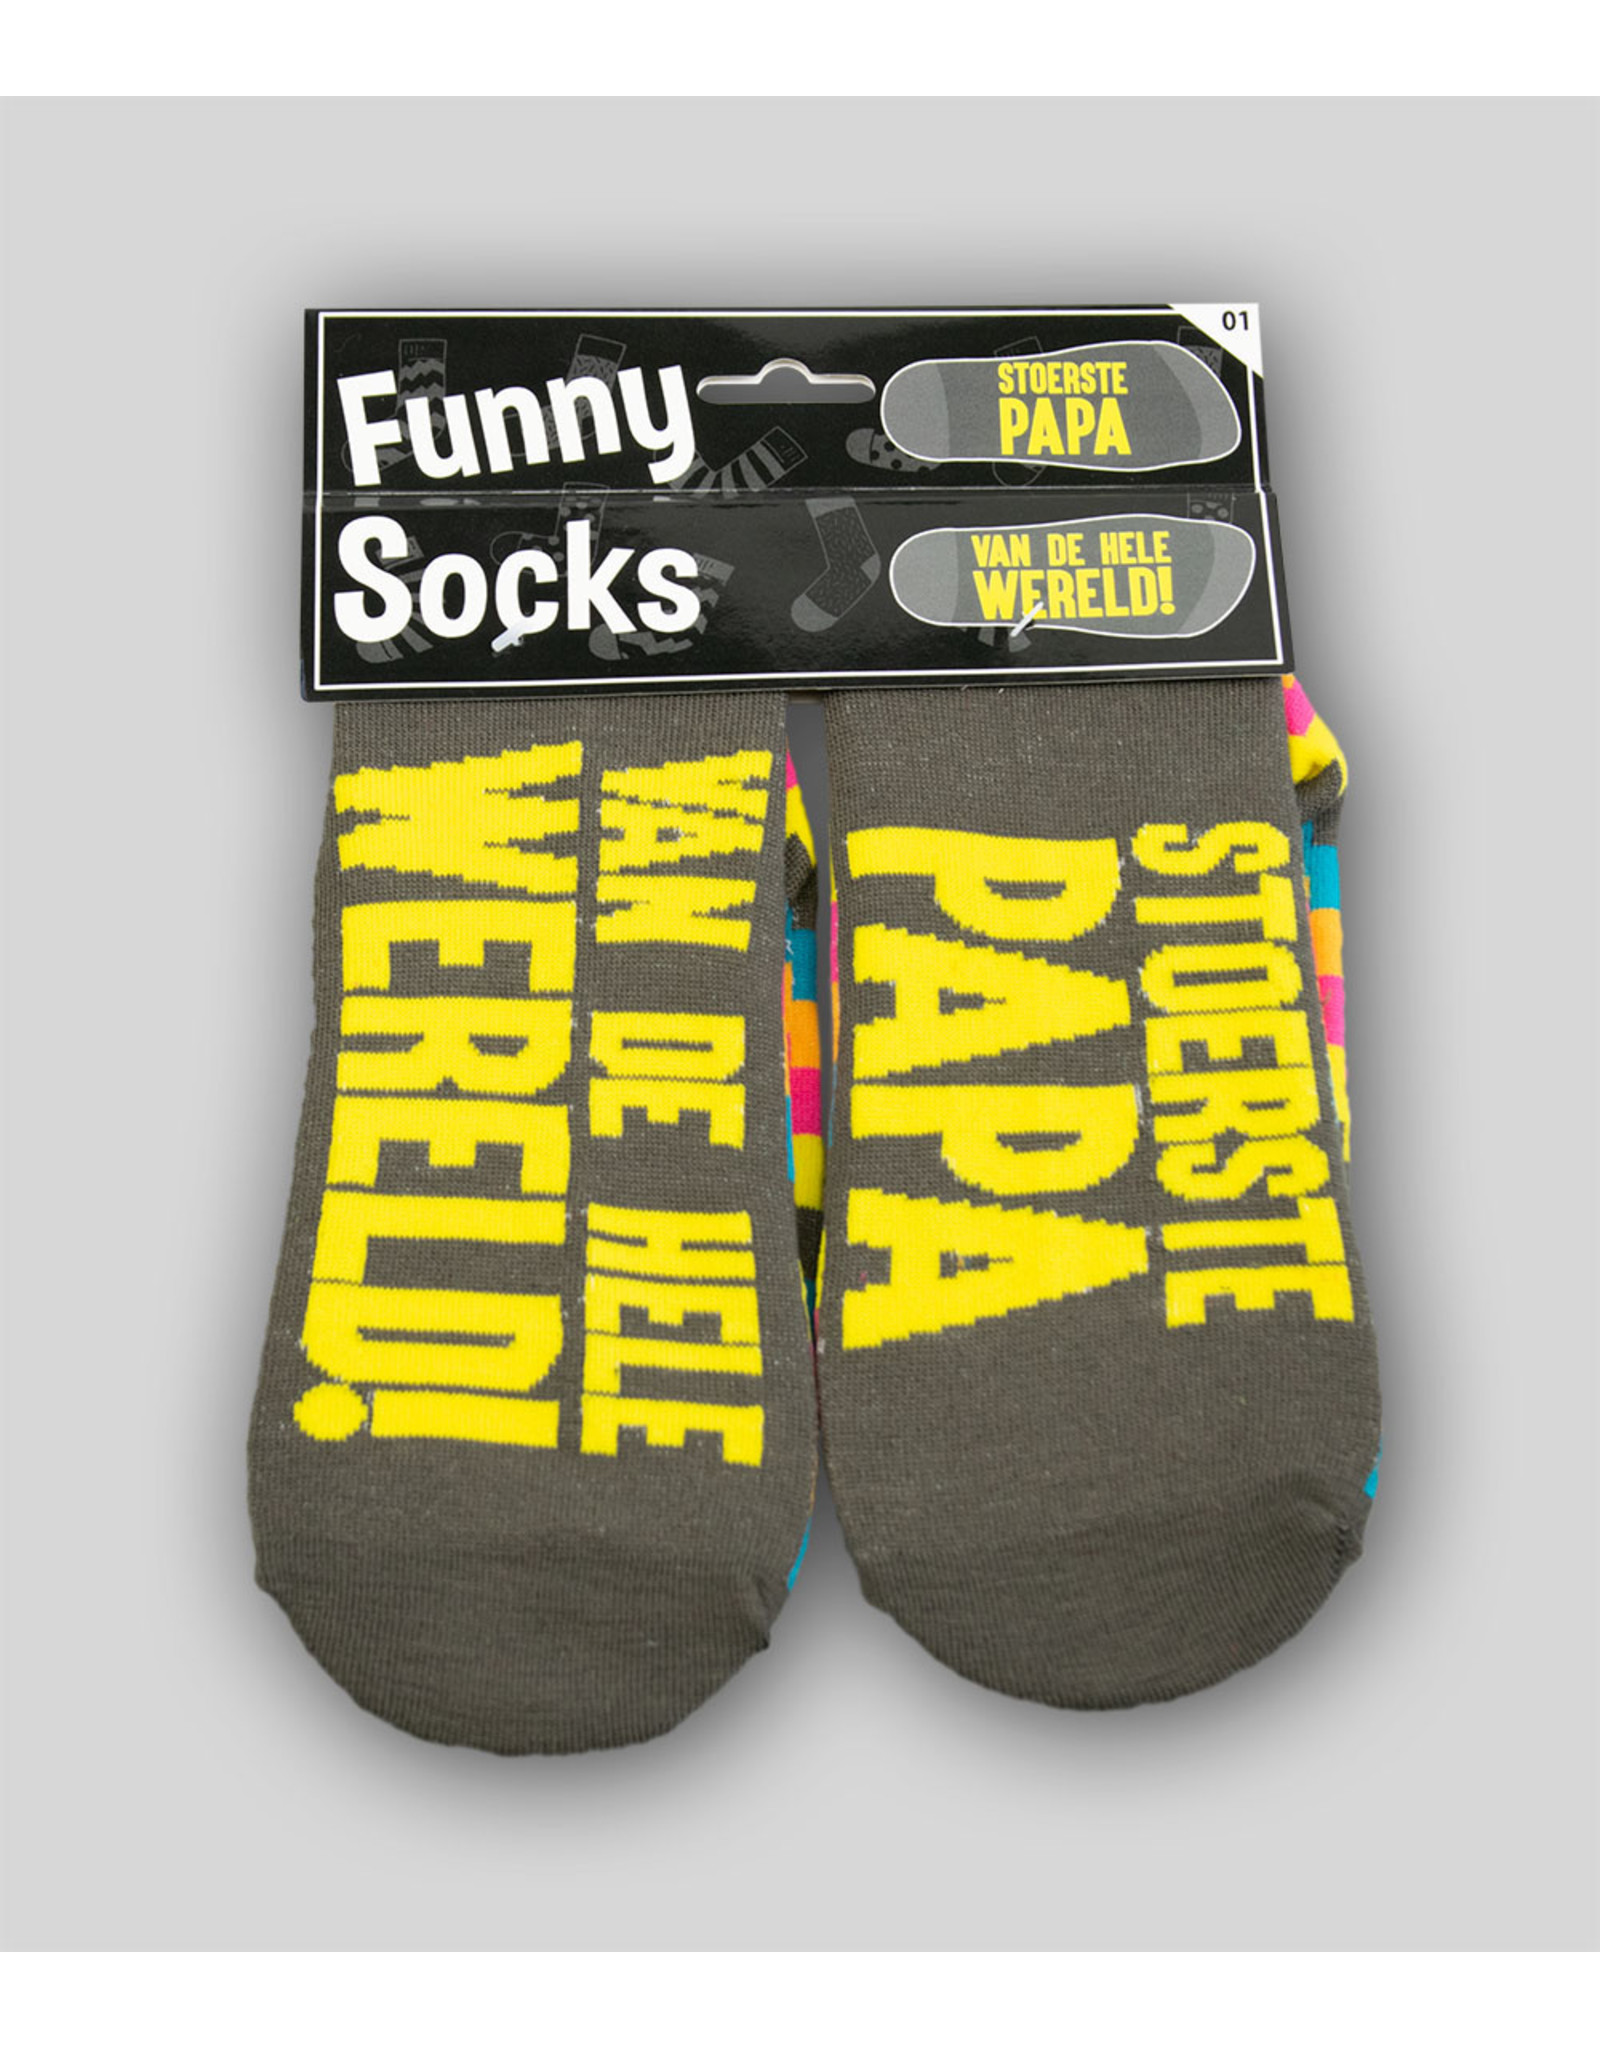 Funny Socks - Stoerste Papa